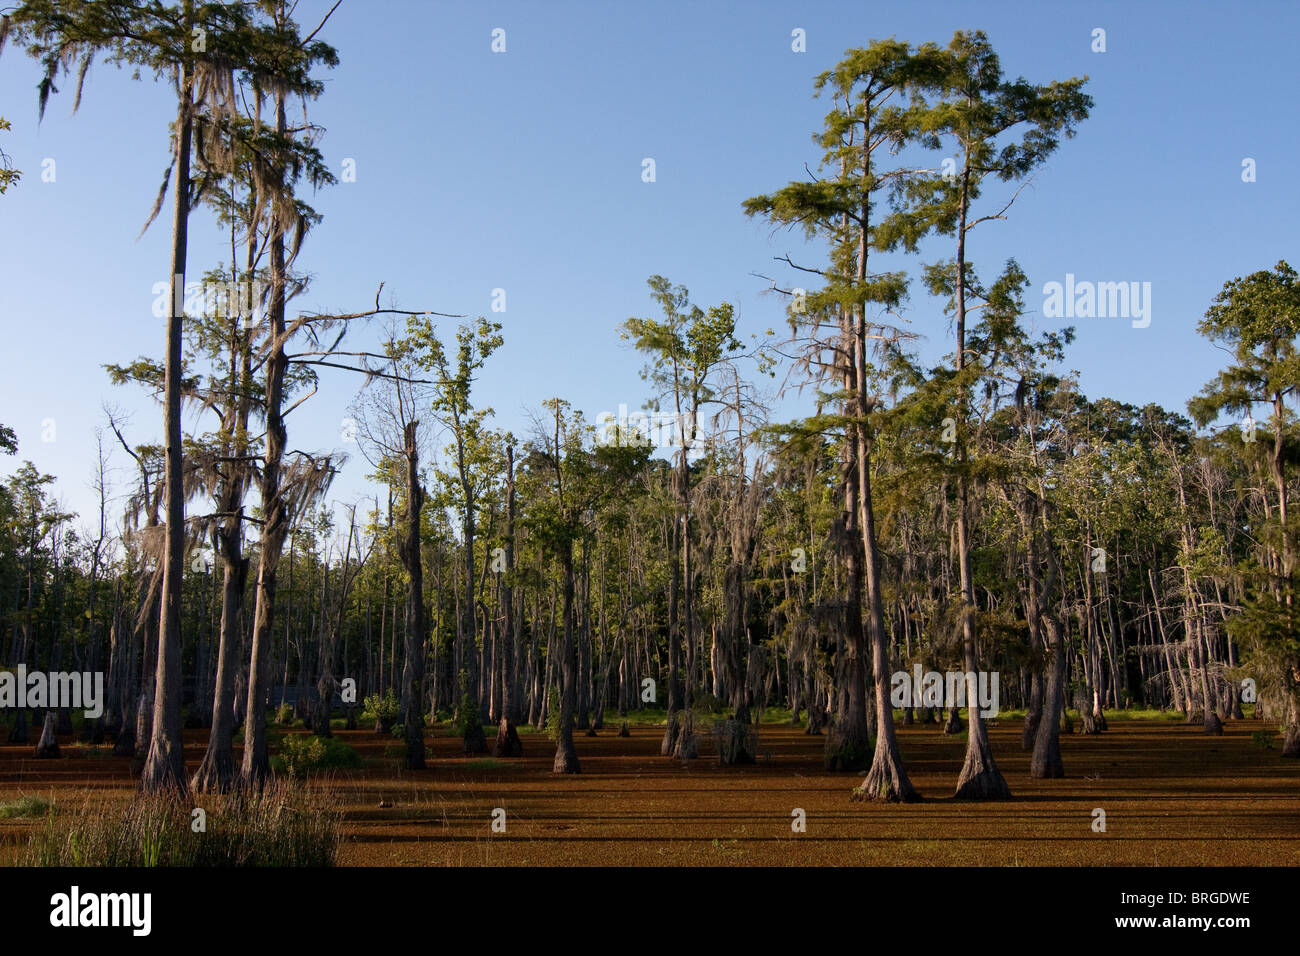 Majestic bald cypress trees (Taxodium distichum) rise from swamp bogs at Sam Houston Jones State Park, Lake Charles, Louisiana. Stock Photo